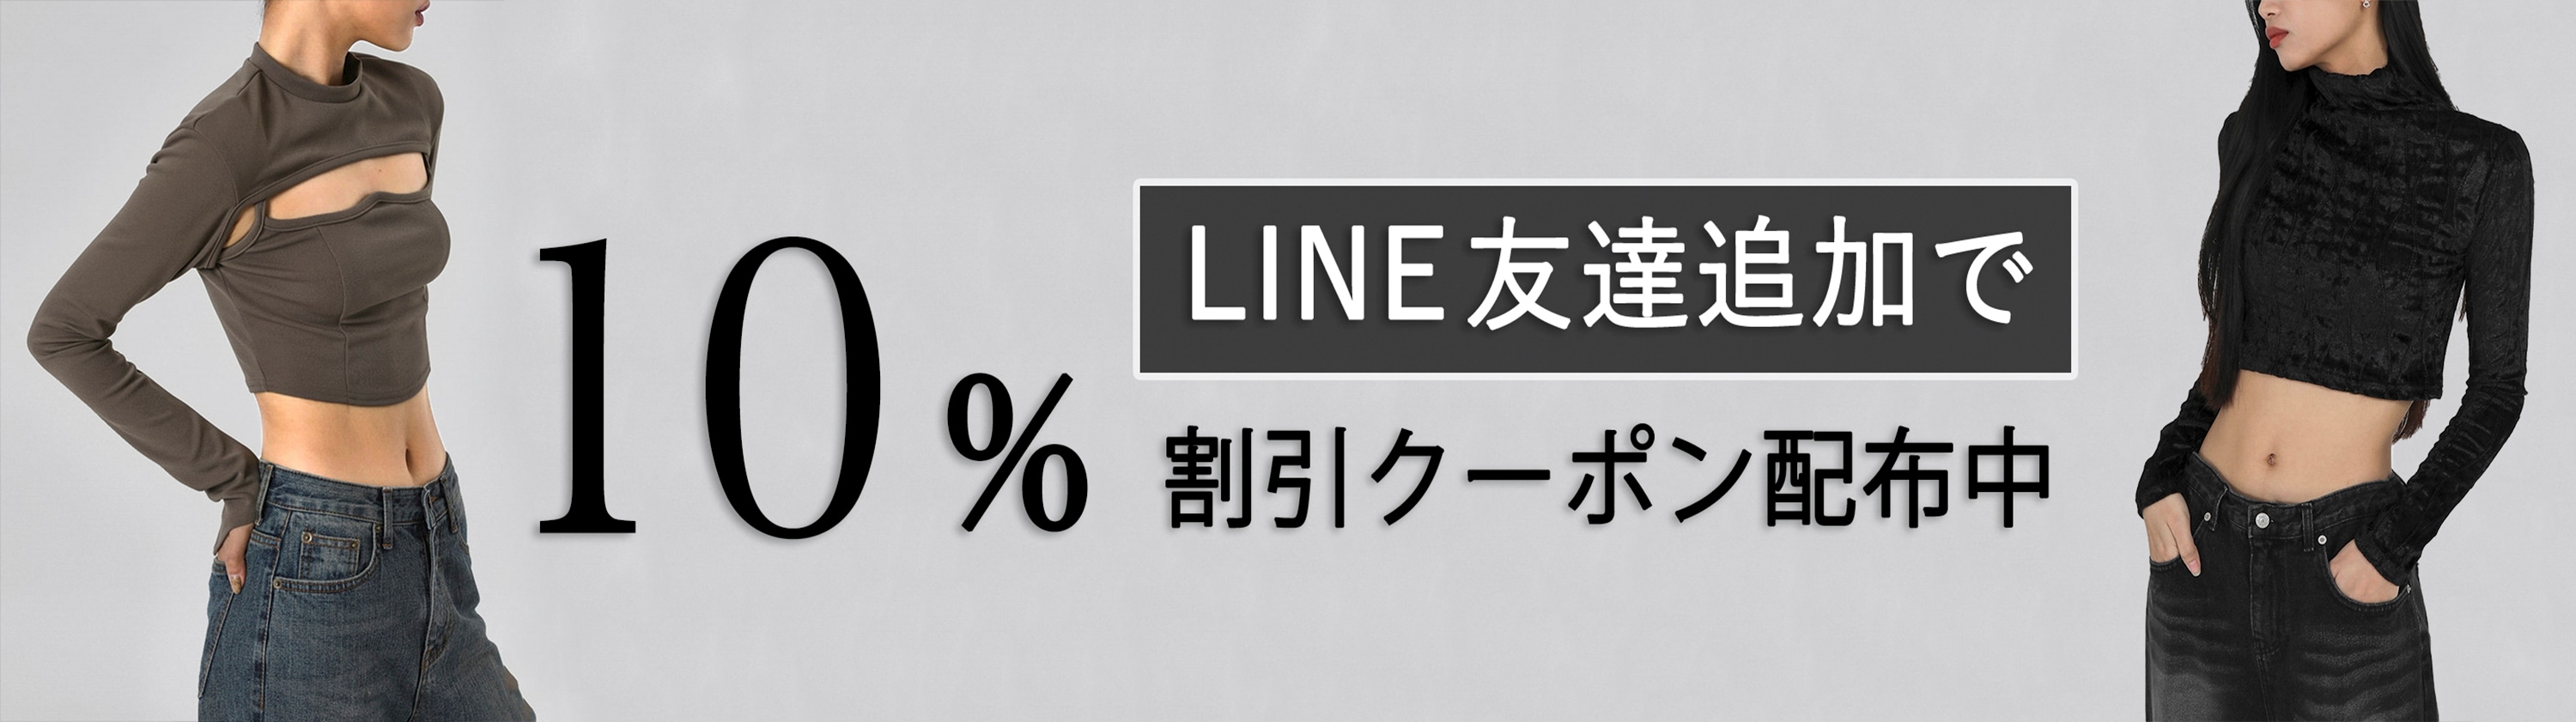 Line追加で10%割引き